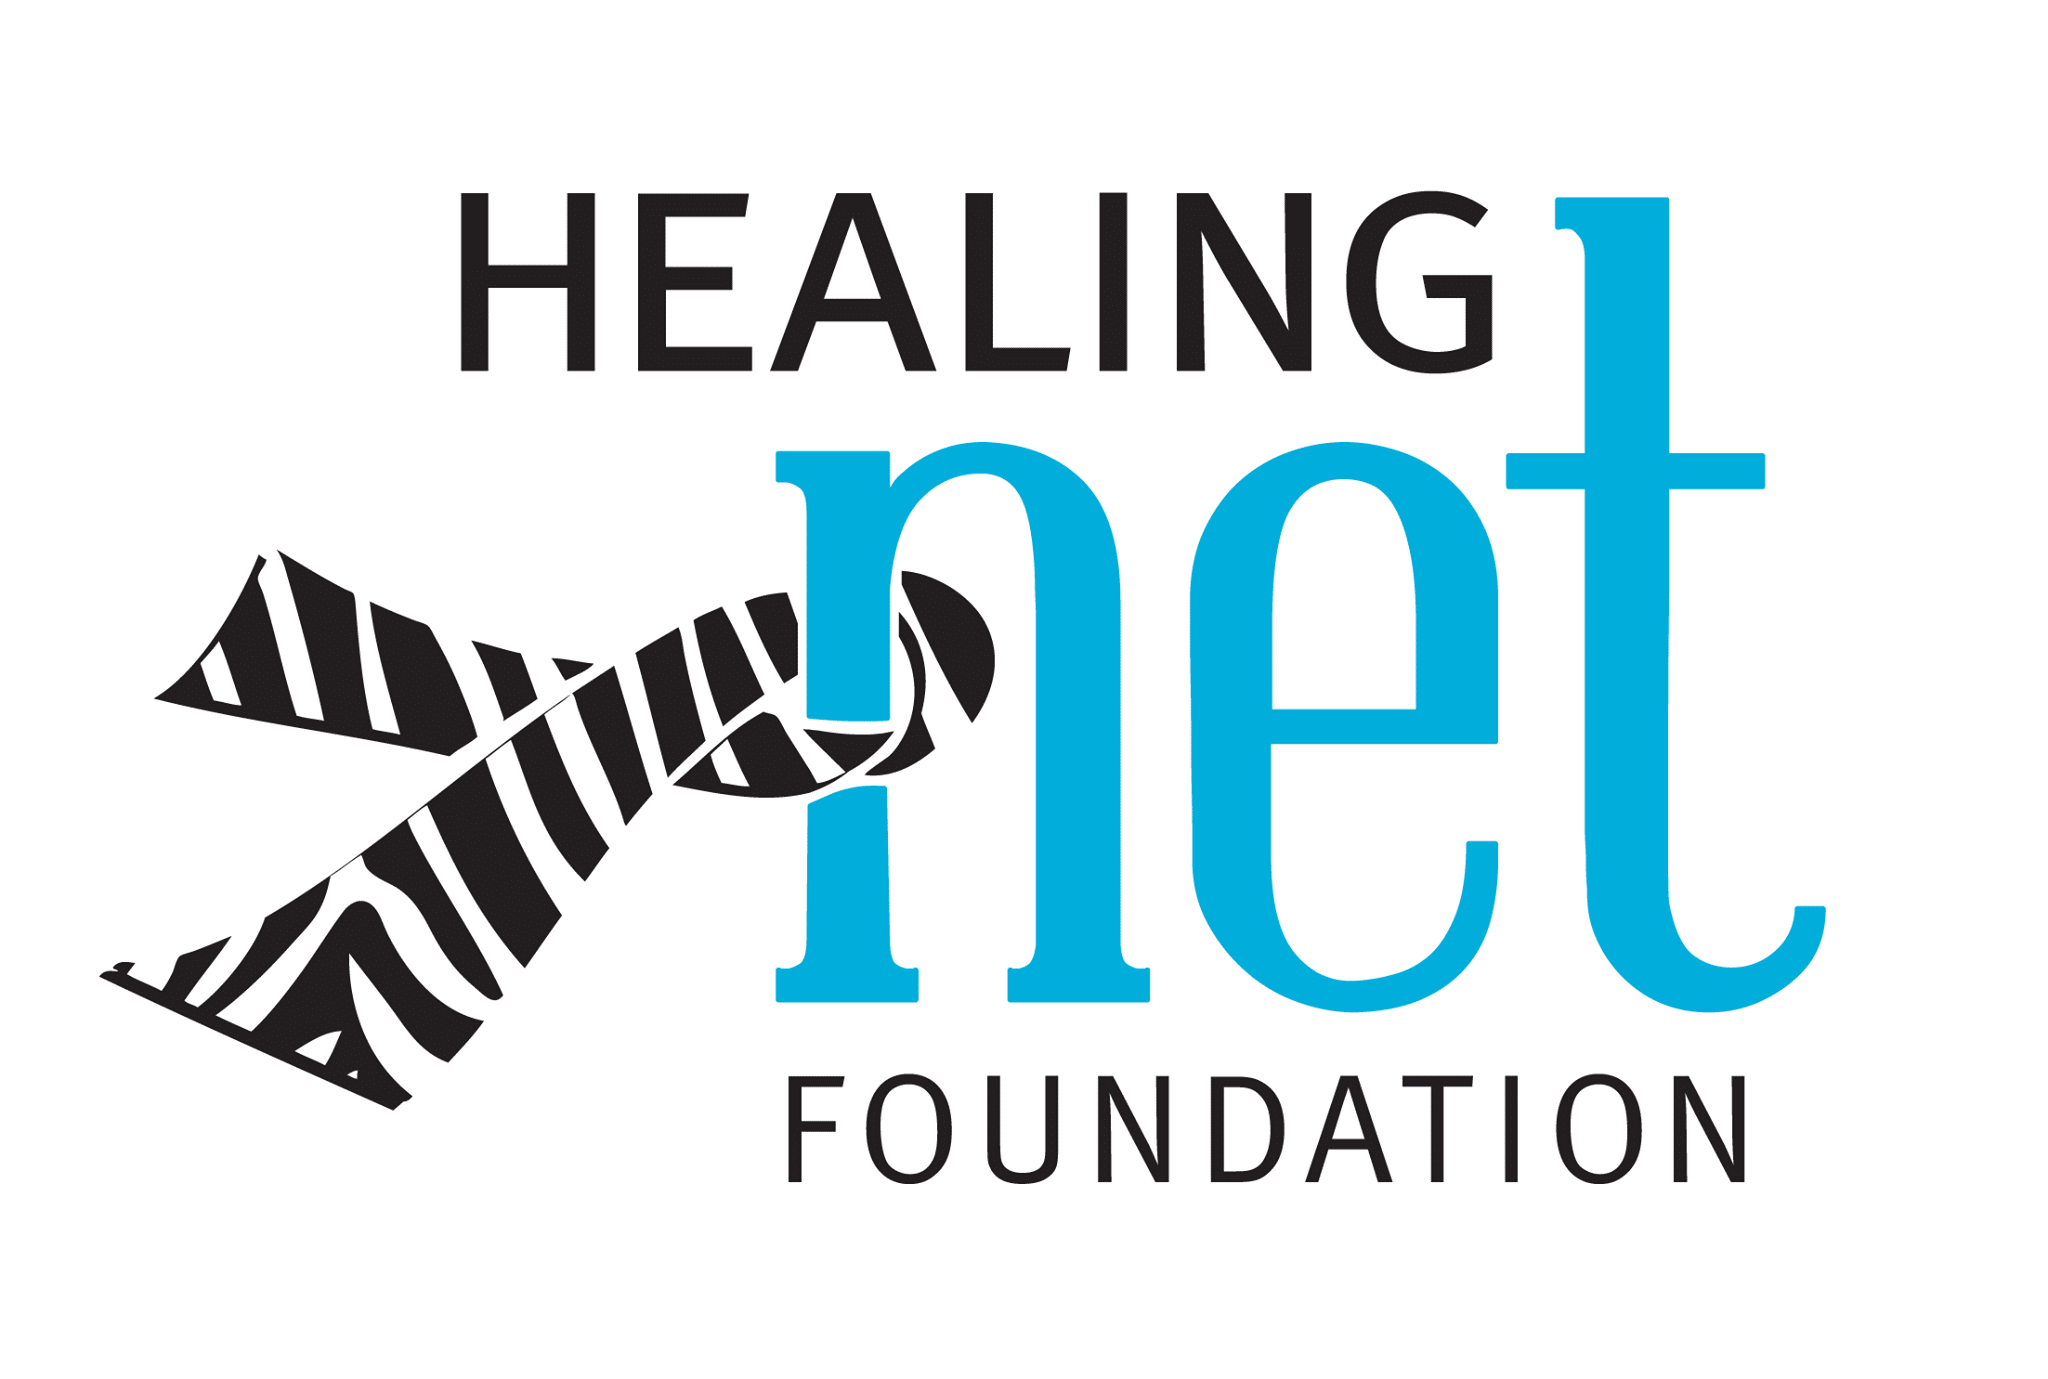 Healing net foundation logo image.